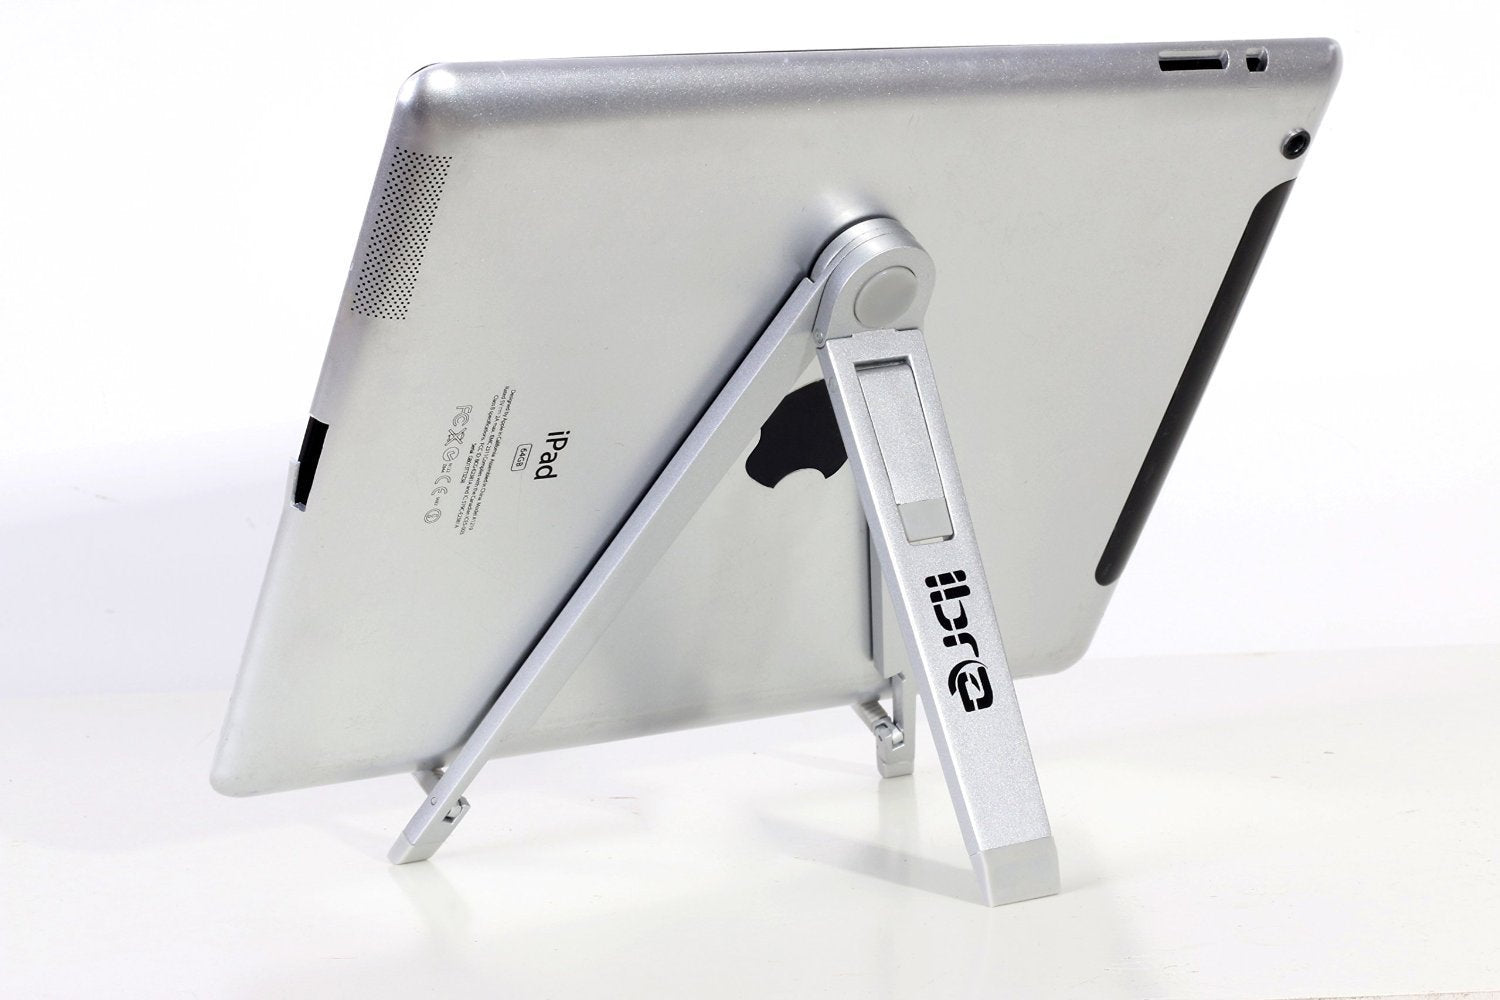 IBRA Portable Lightweight Universal Foldable Desk Stand For iPad, iPad 2, iPad 3 Notebooks, Laptops, Netbooks & Tablet PCs - Silver